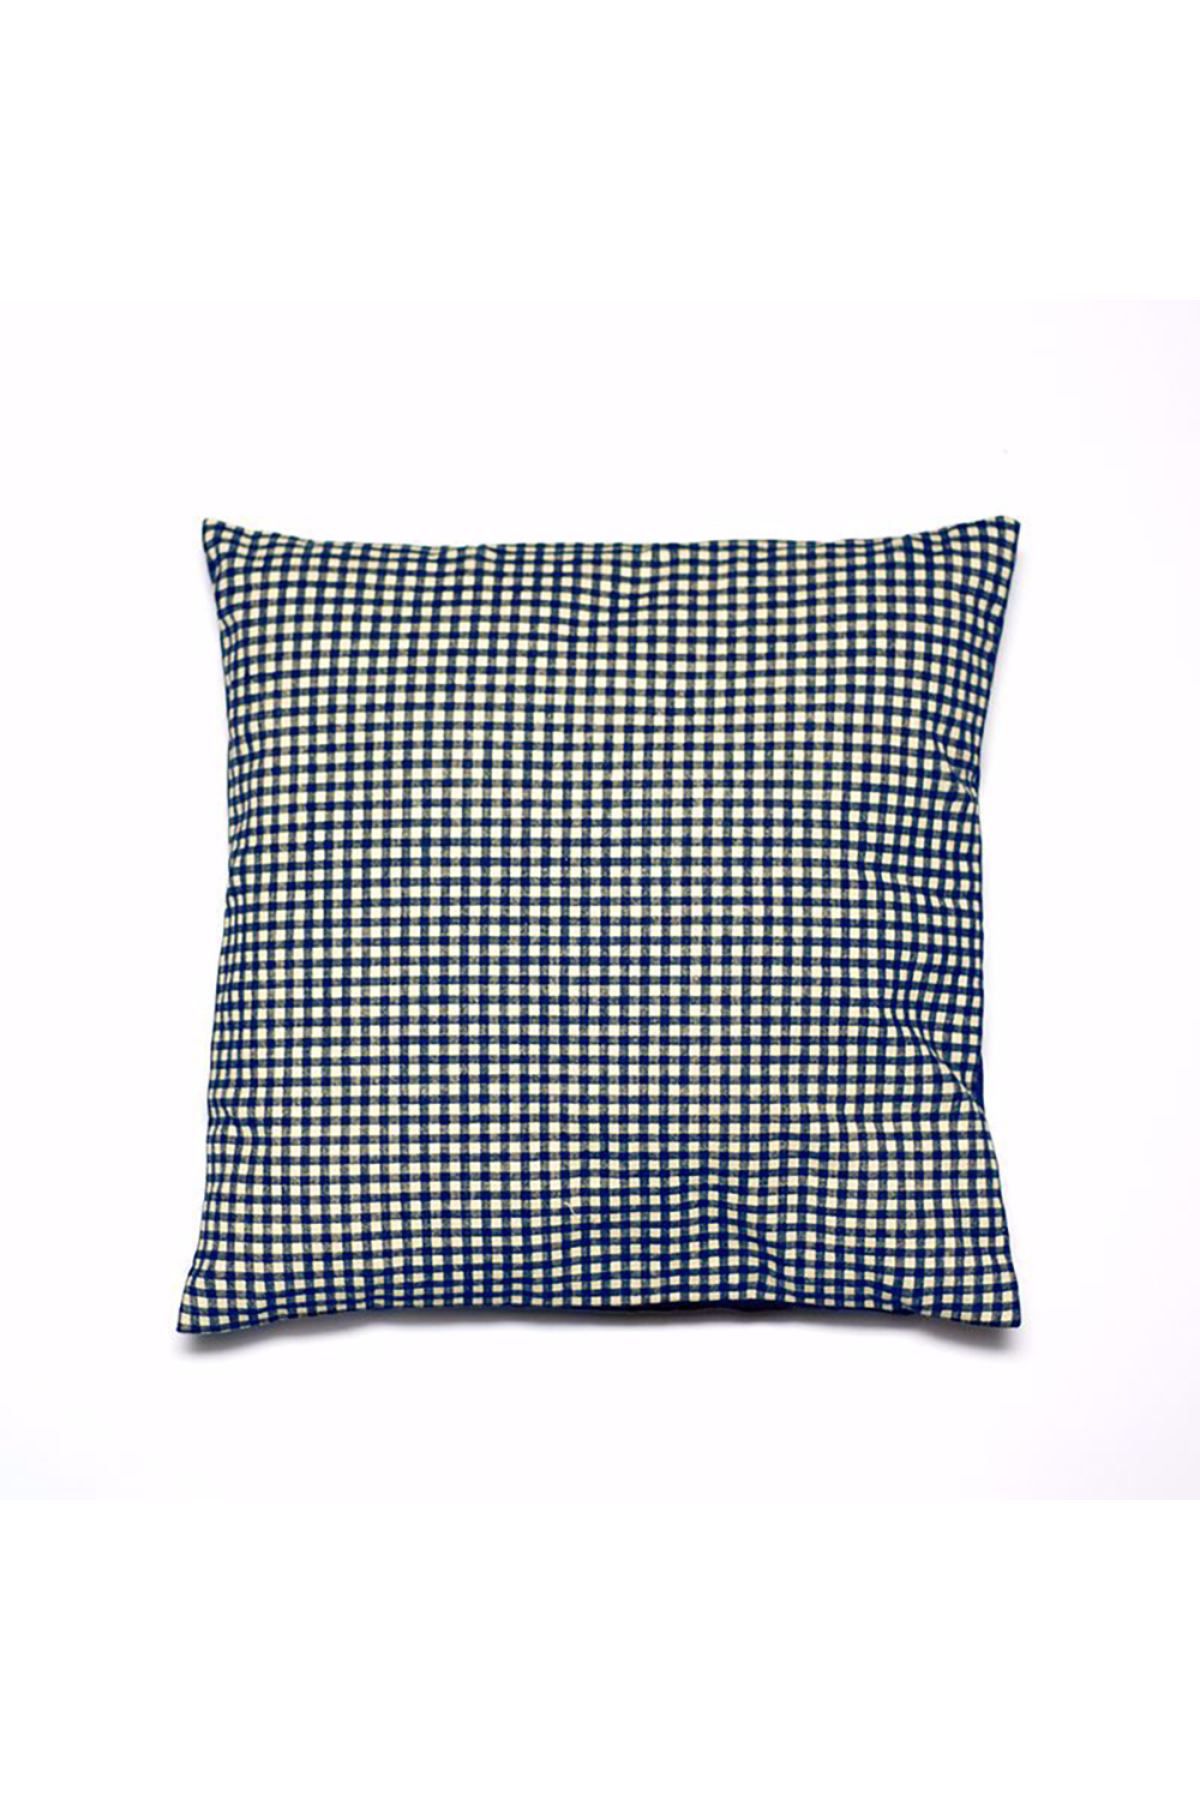 Monochrome Checkered Cushion Cover